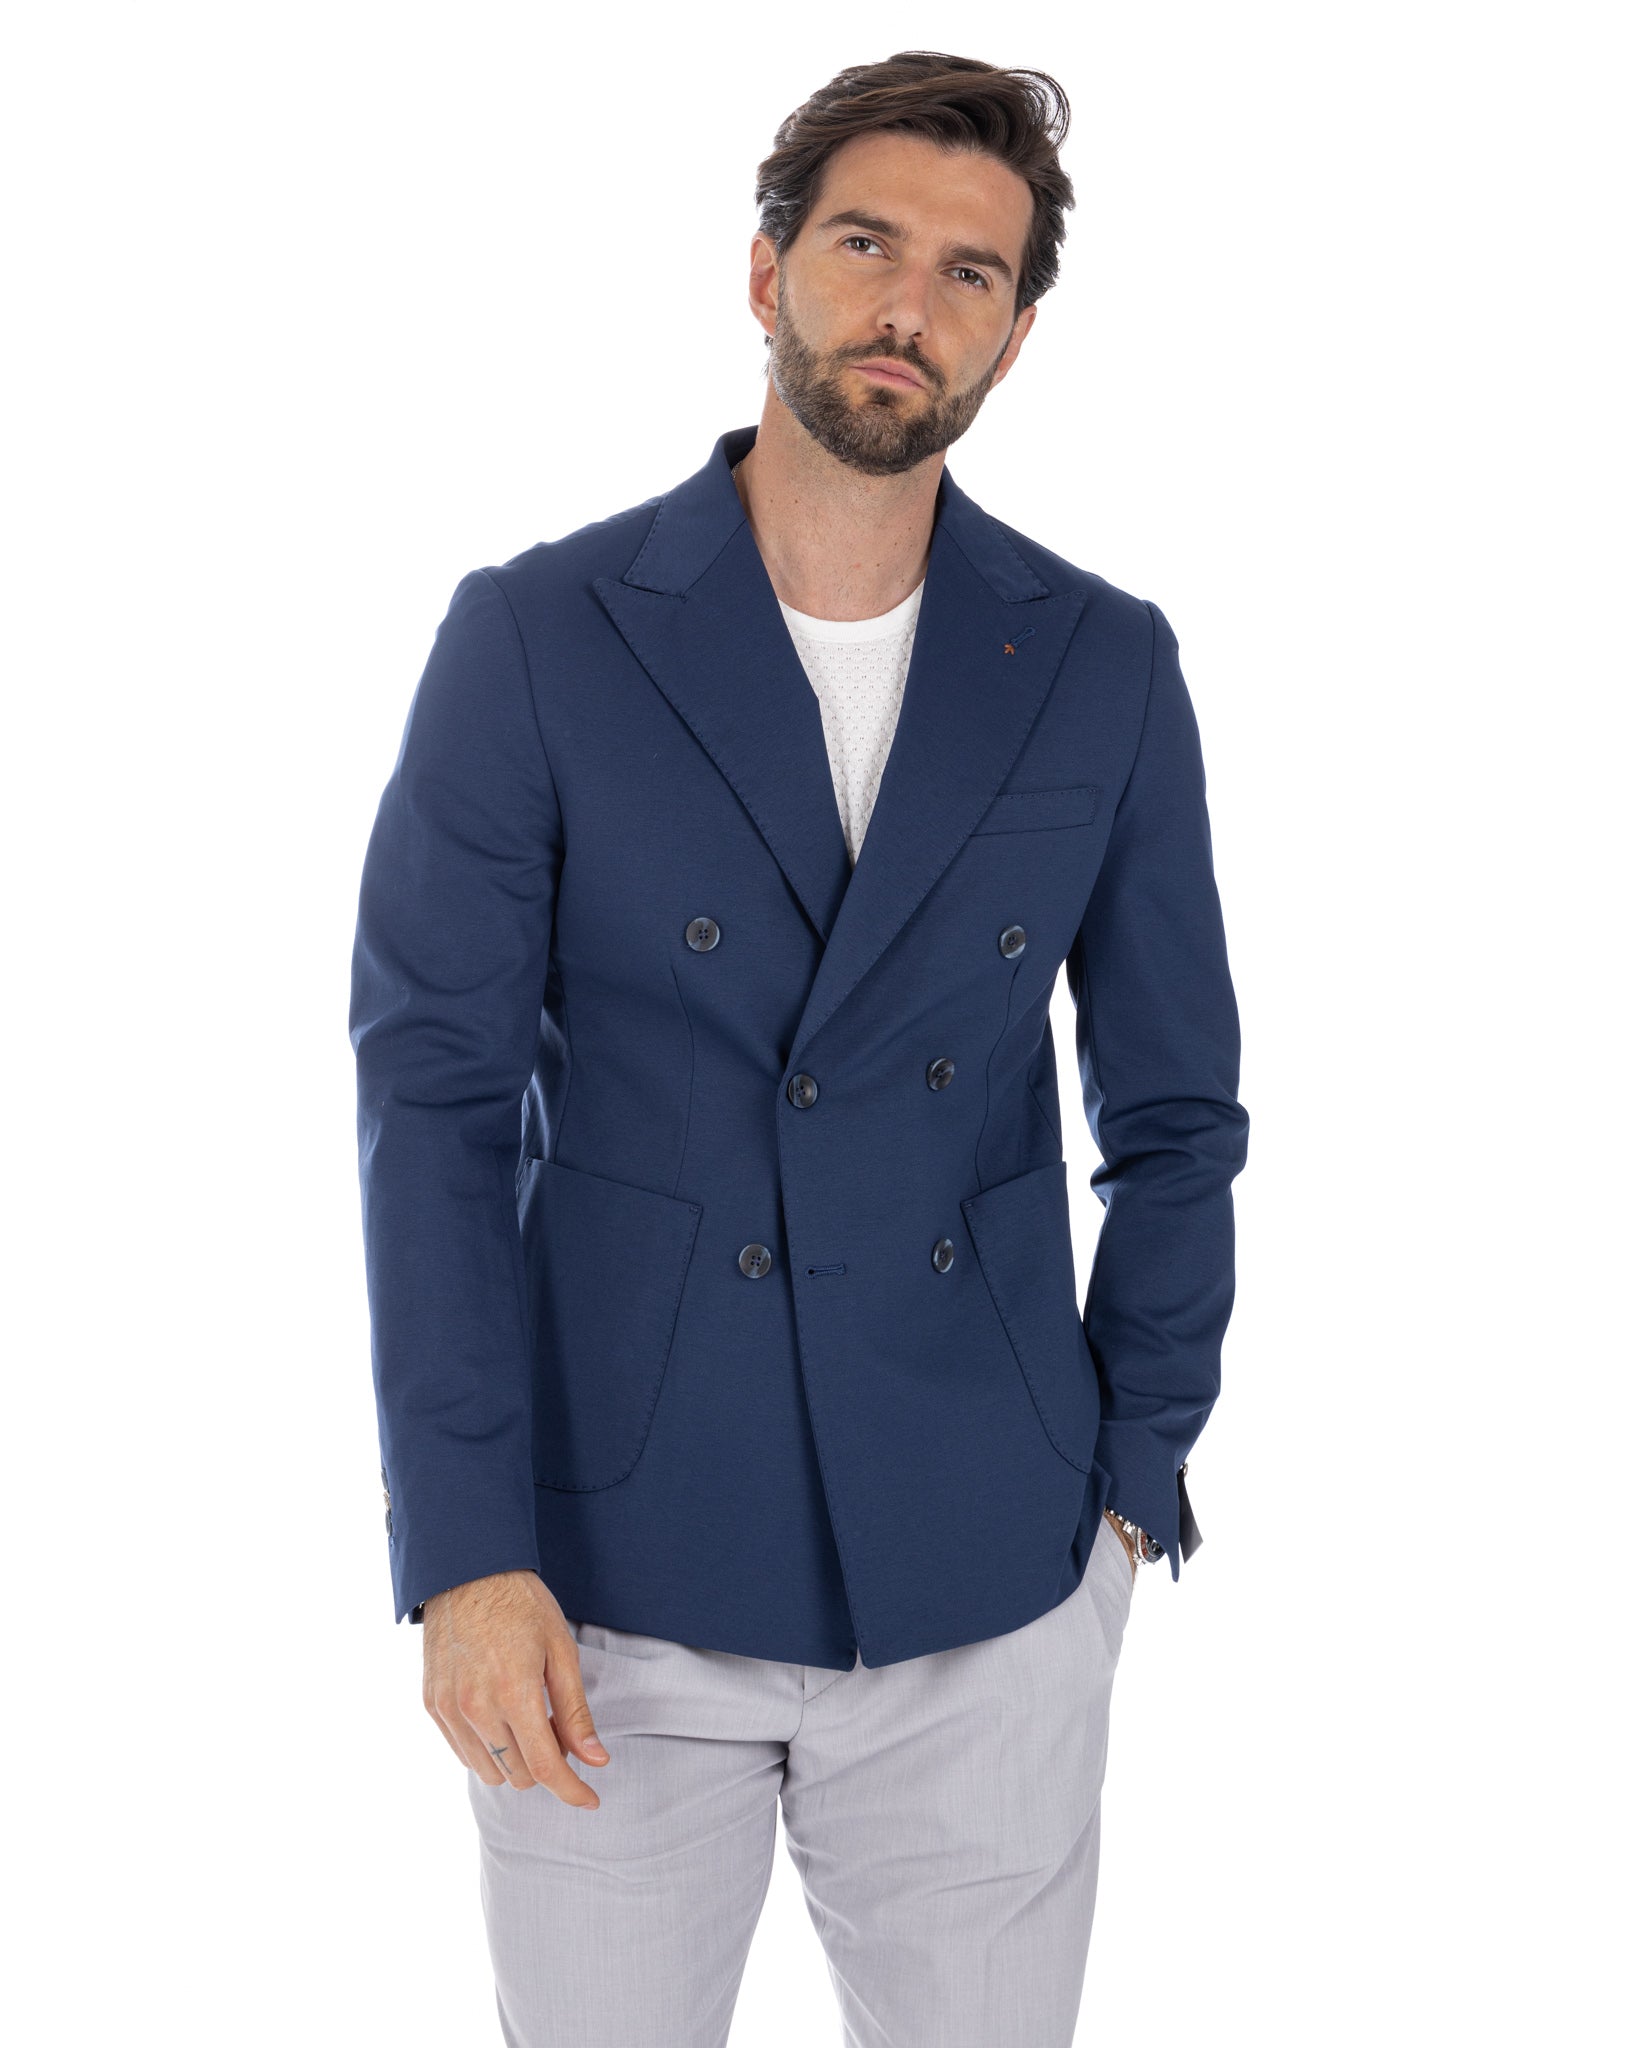 Ostuni - blue double-breasted jacket